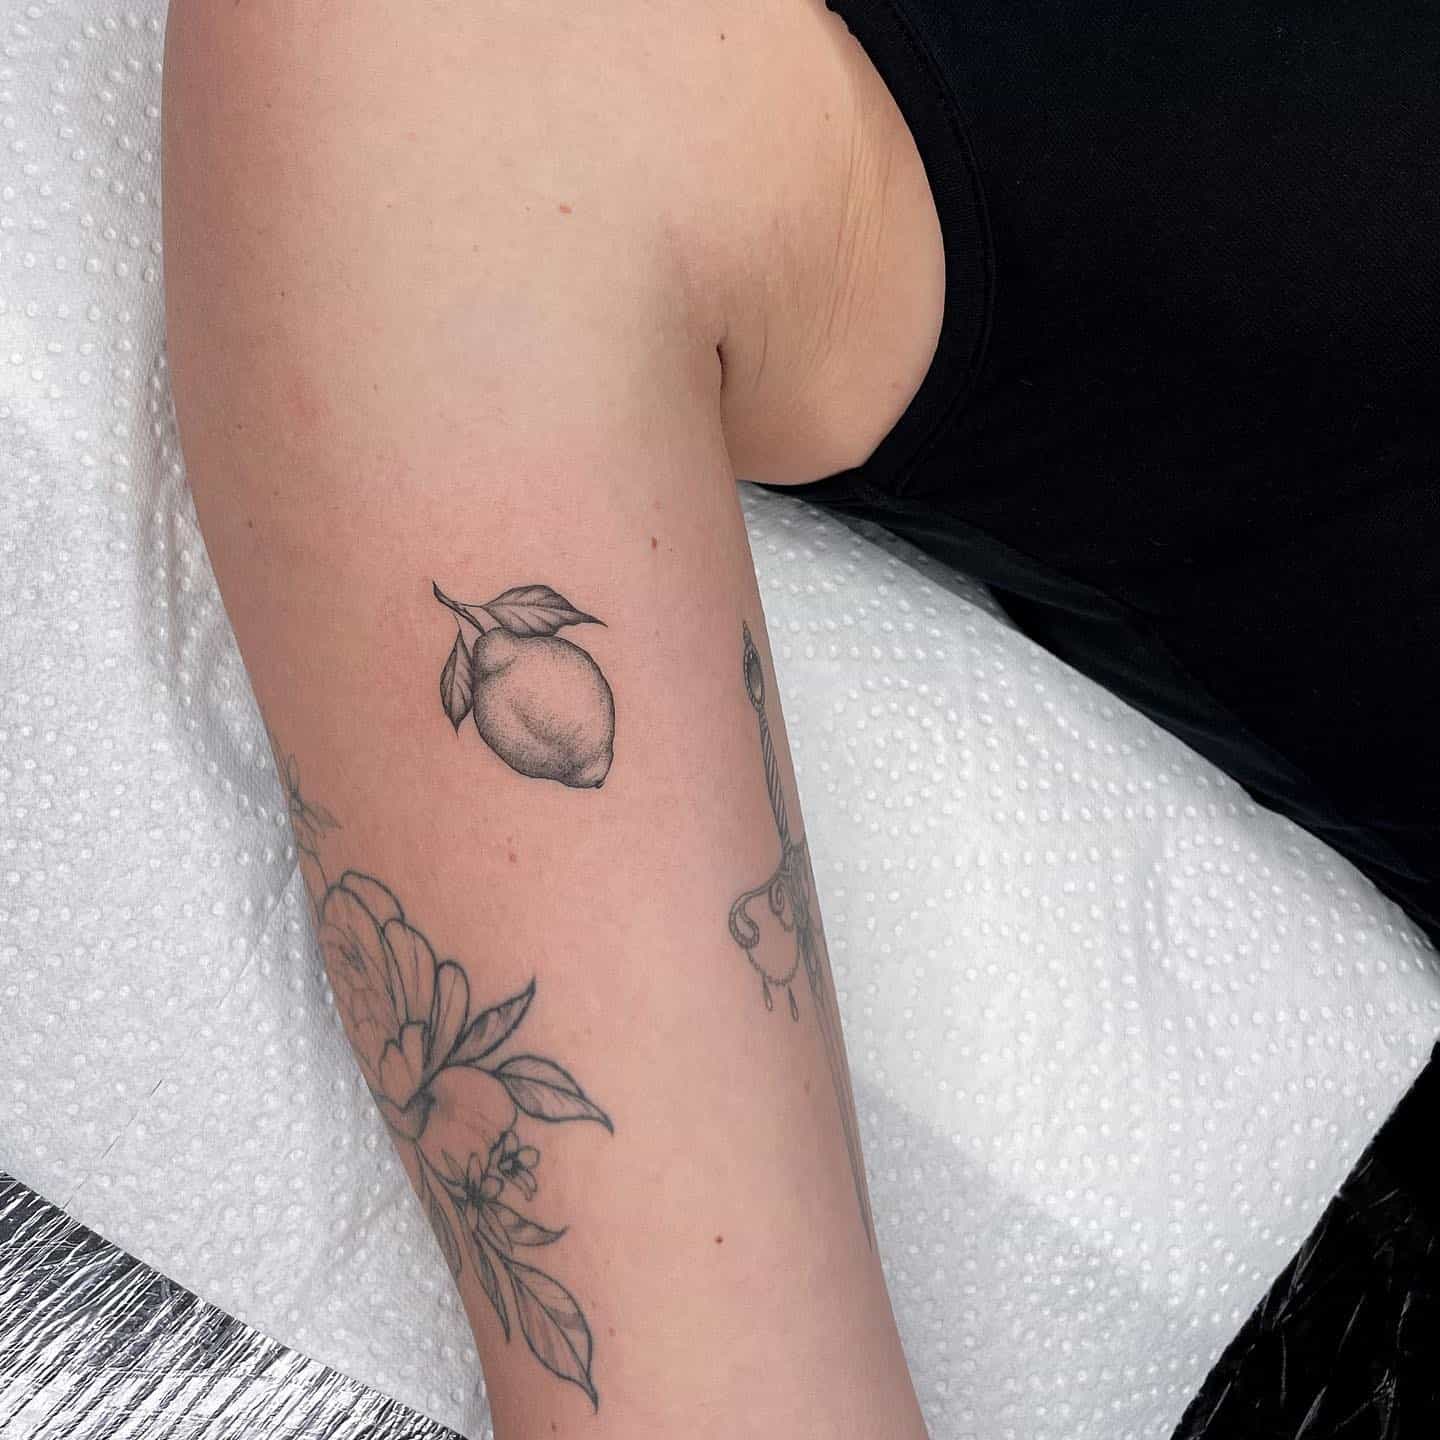 Dice tattoo located on the inner arm, minimalistic